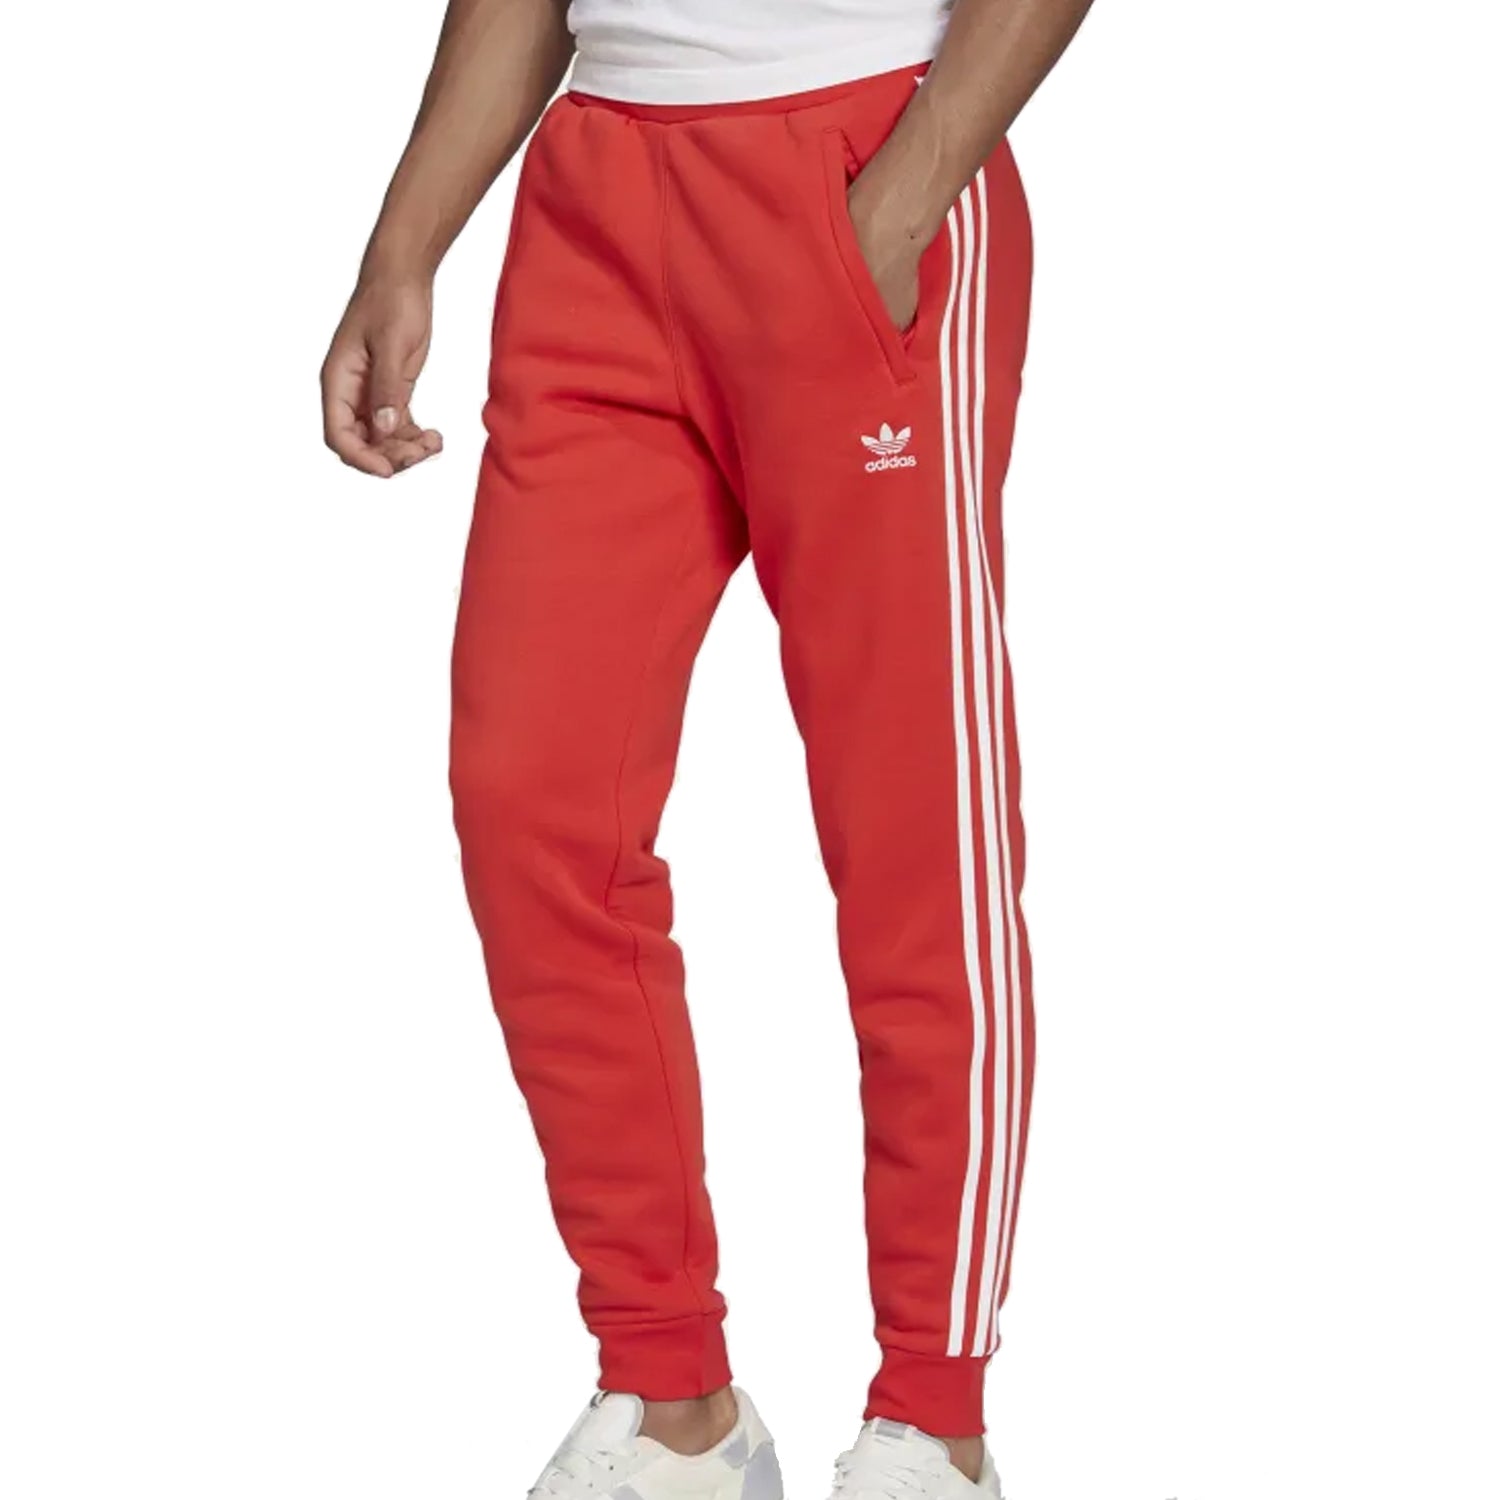 Adidas 3-stripes Pants Mens Style : Hf2100